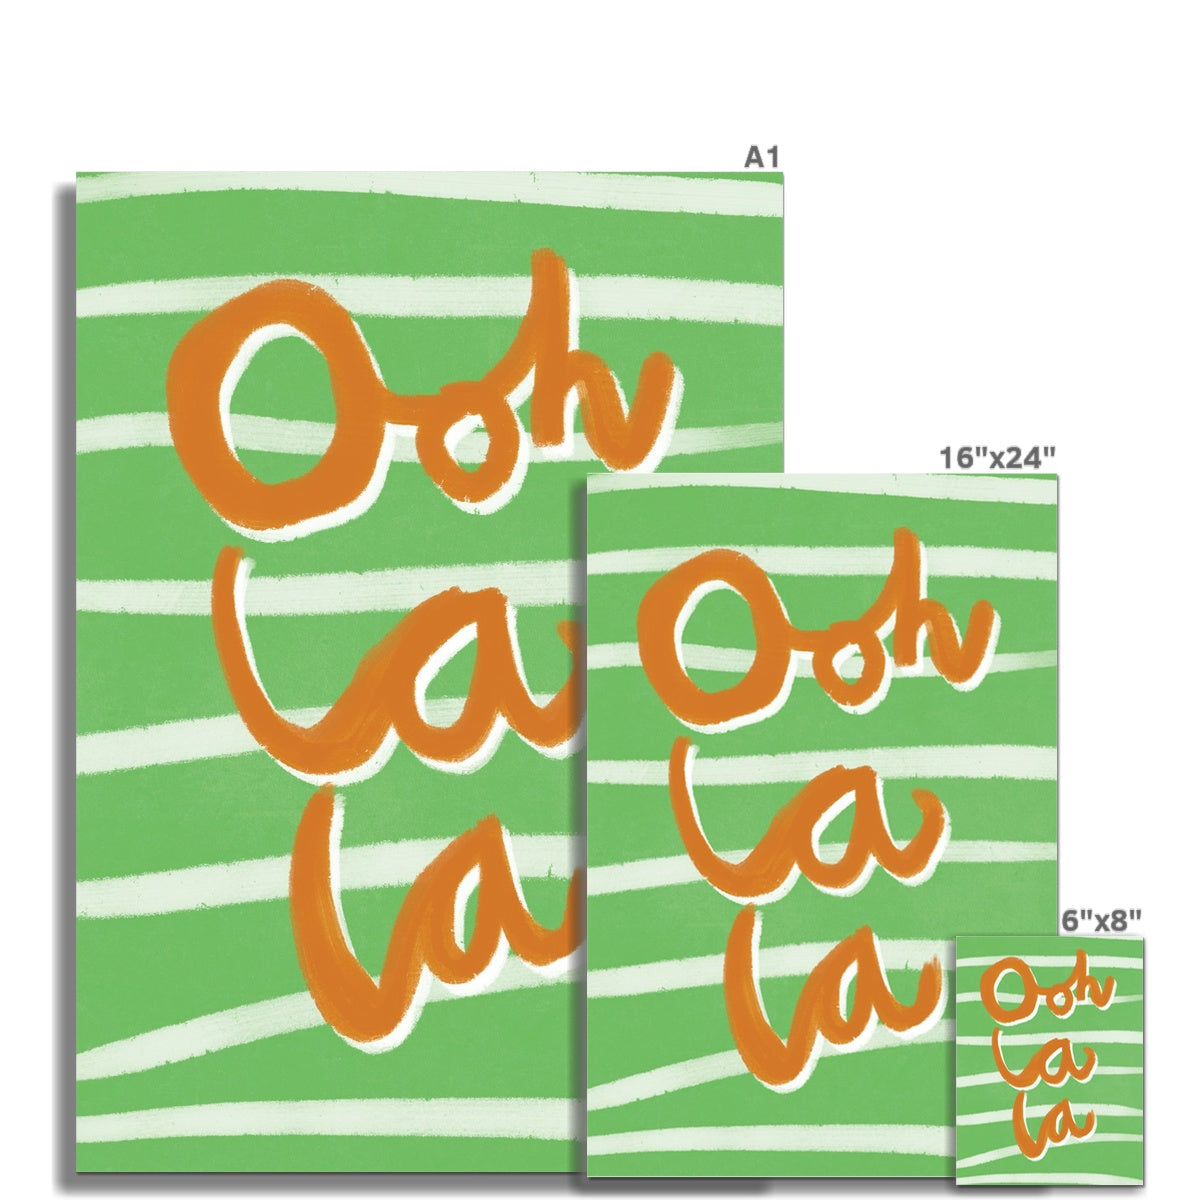 Ooh La La Art Print - Green, White and Brown Fine Art Print